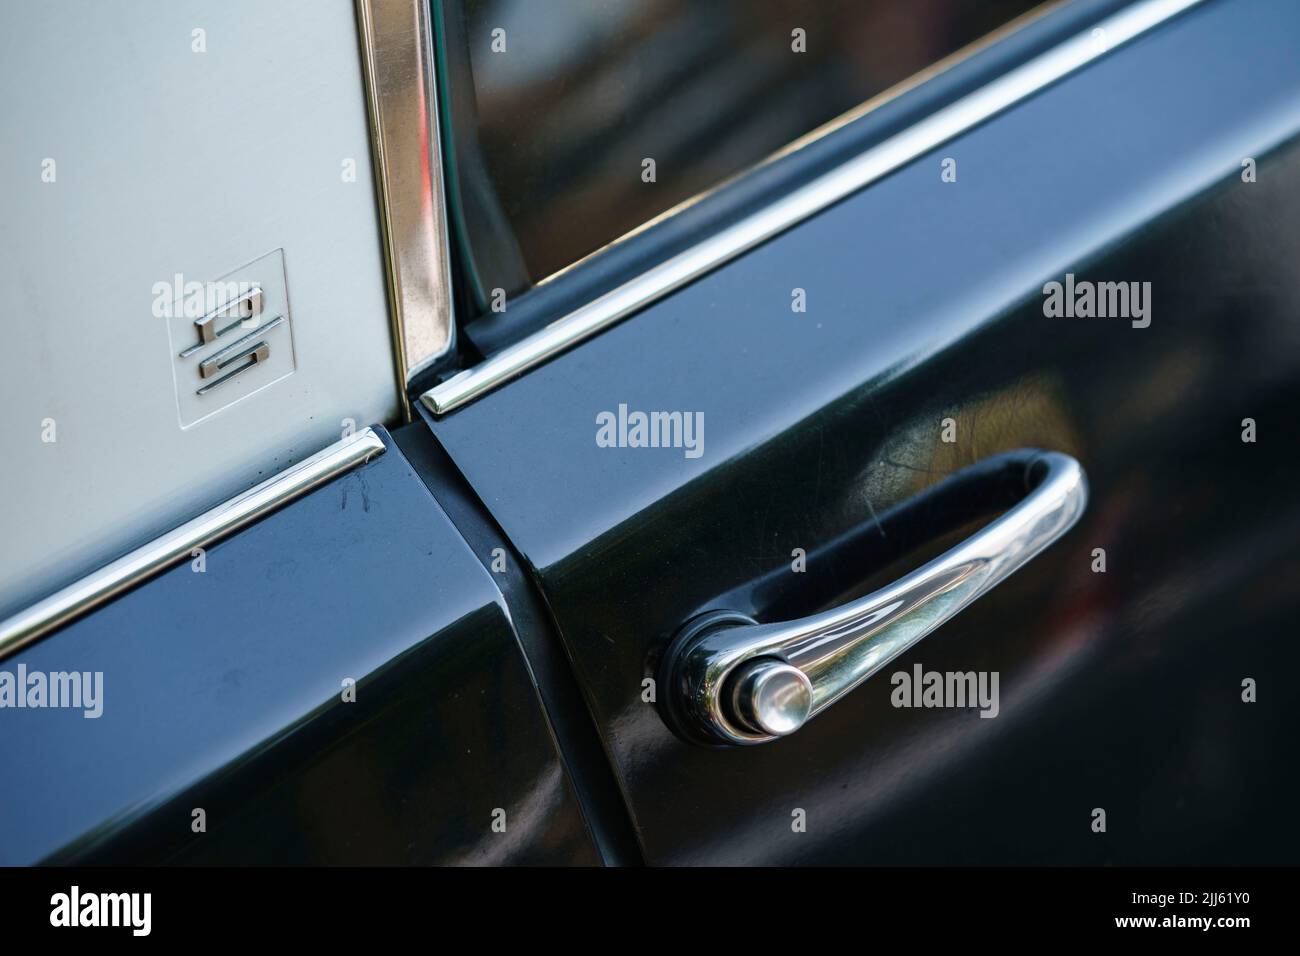 Citroen car door handle hi-res stock photography and images - Alamy